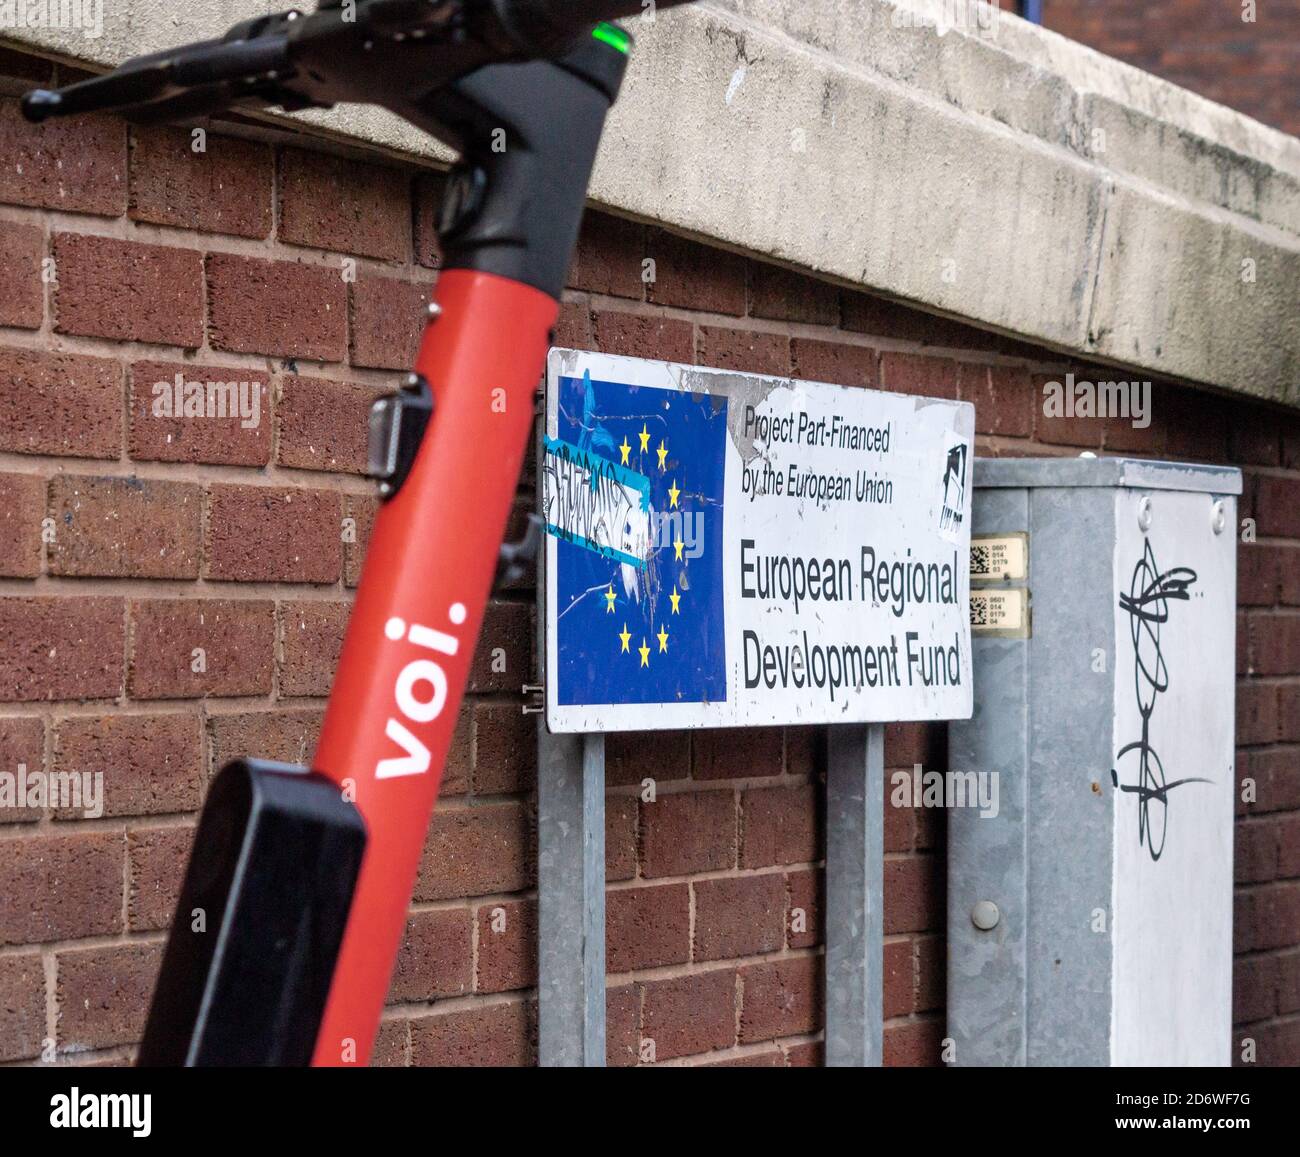 Voi electric scooter next to EU sign - European Regional Development Fund, Birmingham UK Stock Photo